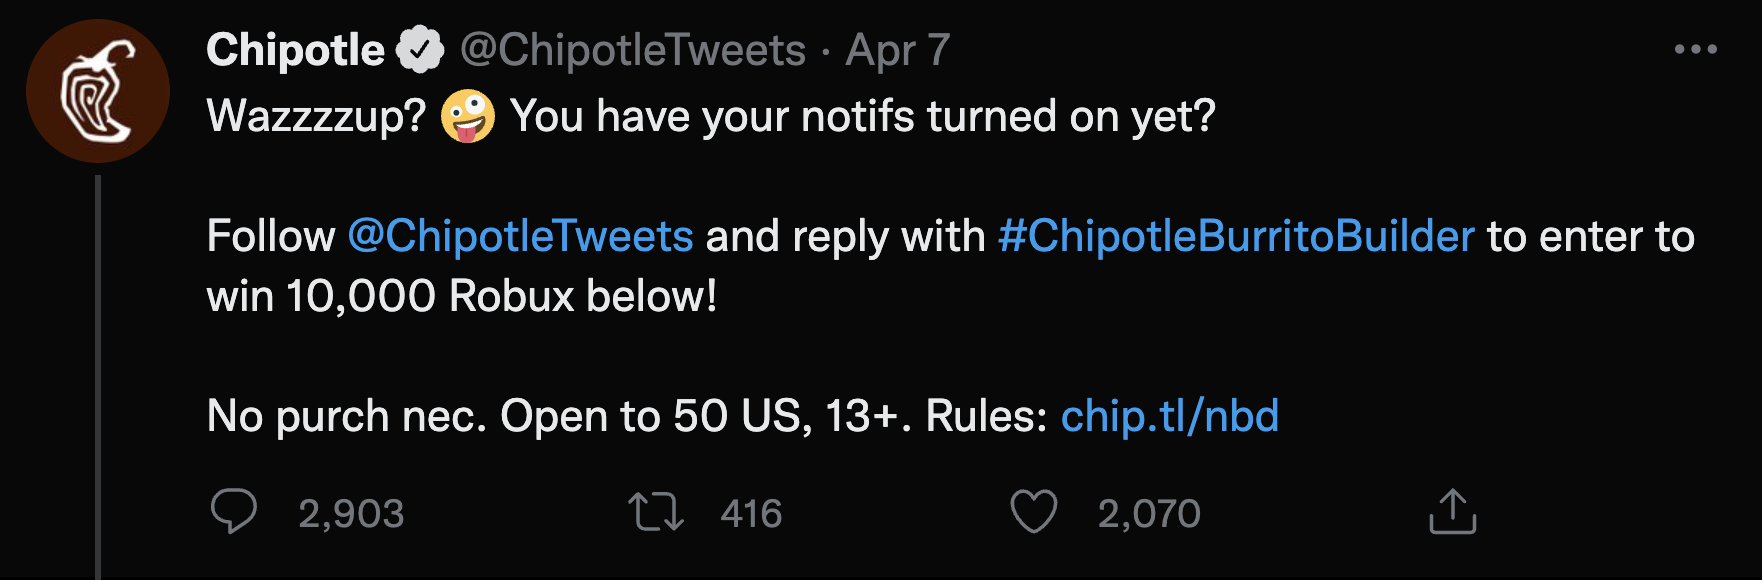 Chipotle on Twitter screenshot